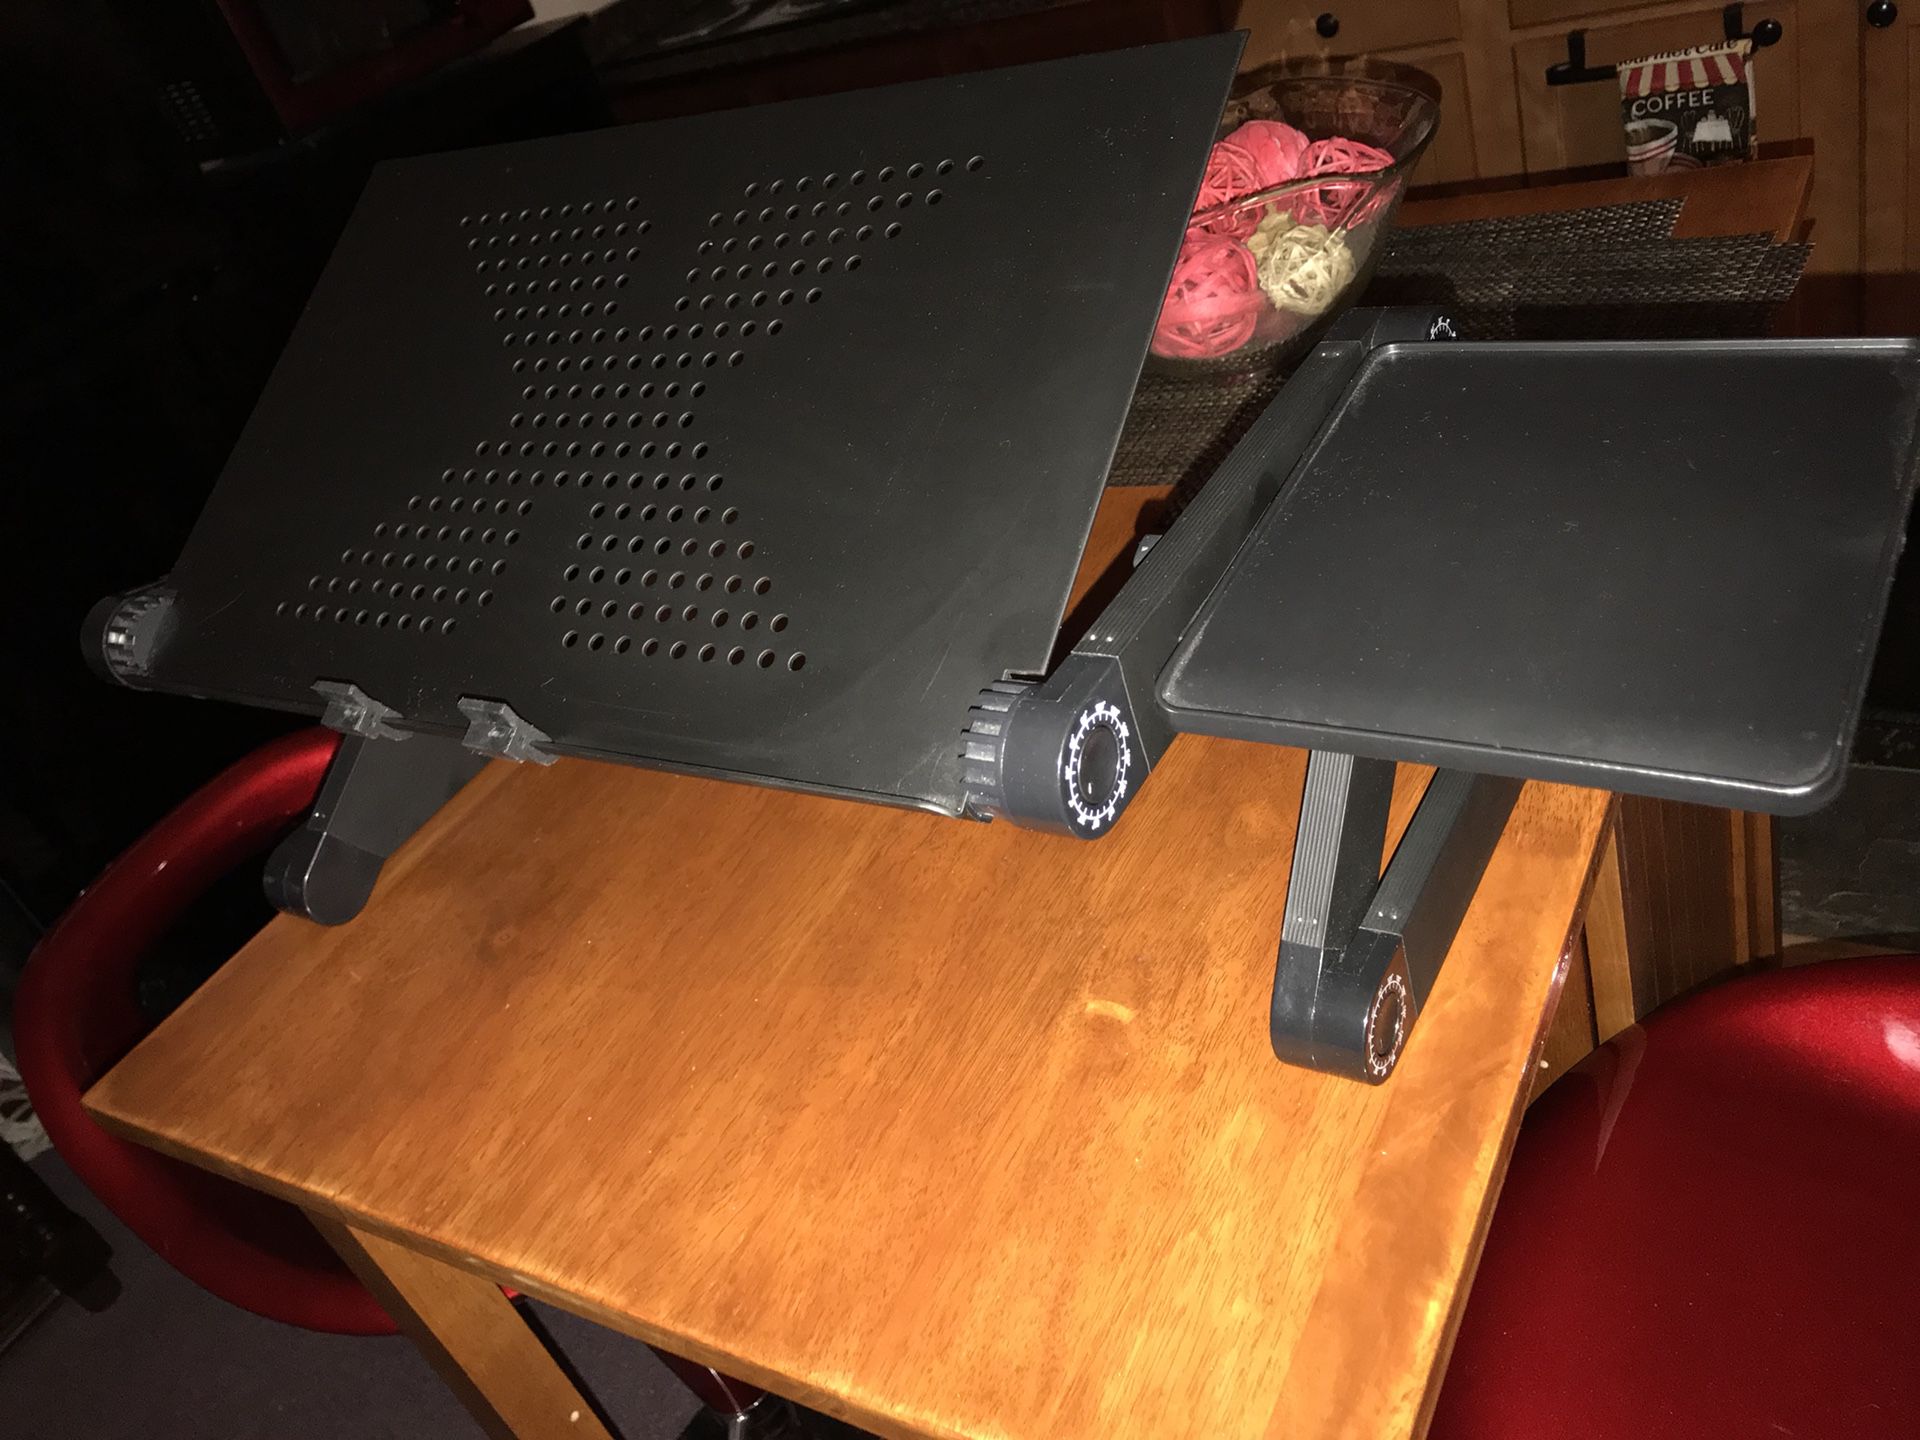 Portable/Adjustable Lap Top/Floor Stand